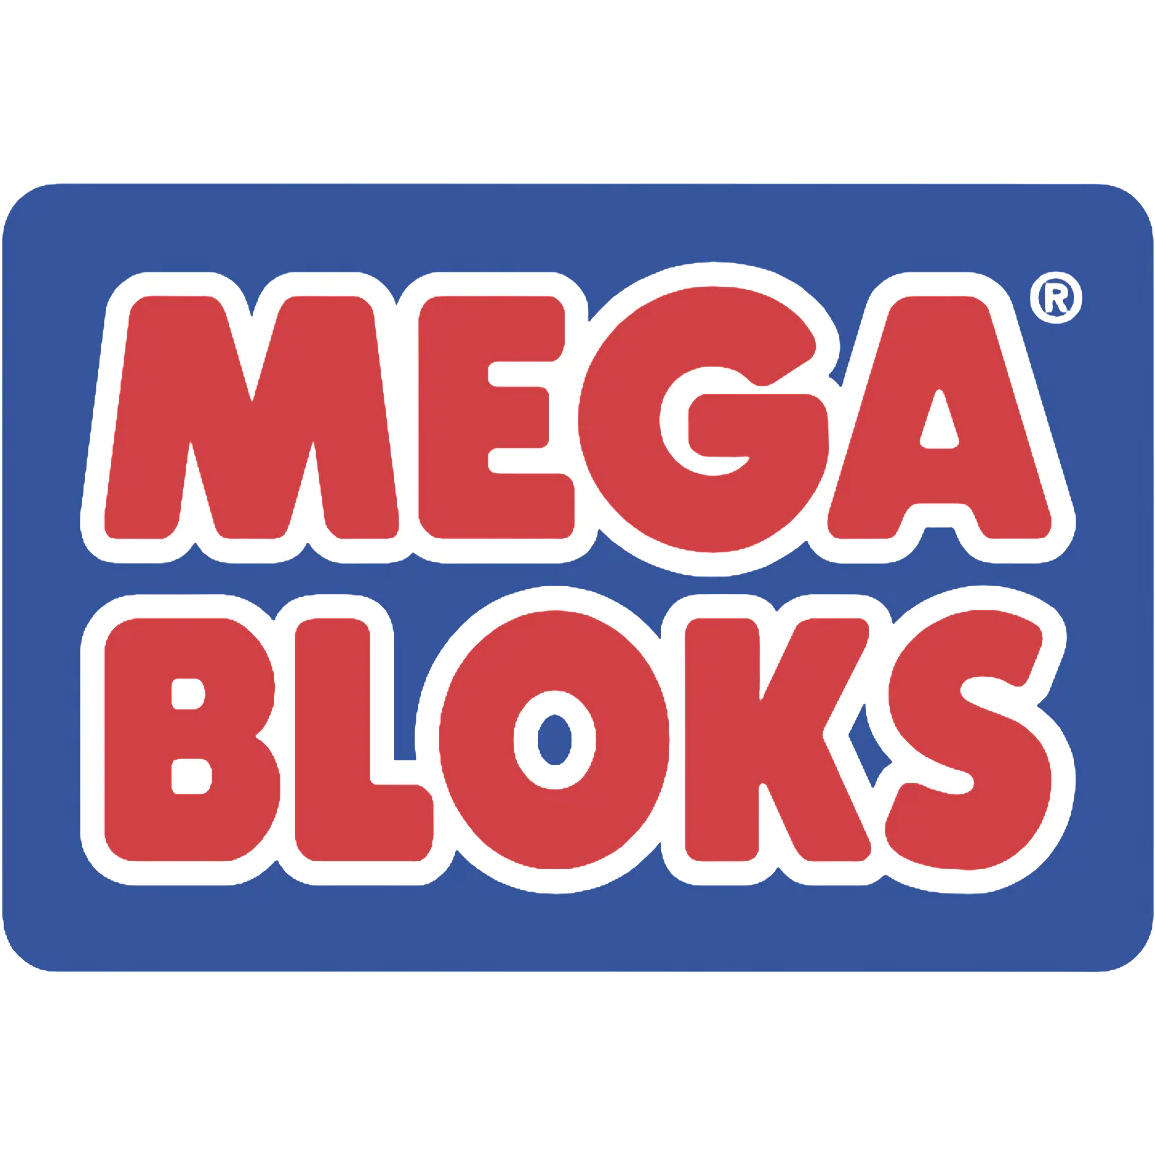 Mega Bloks